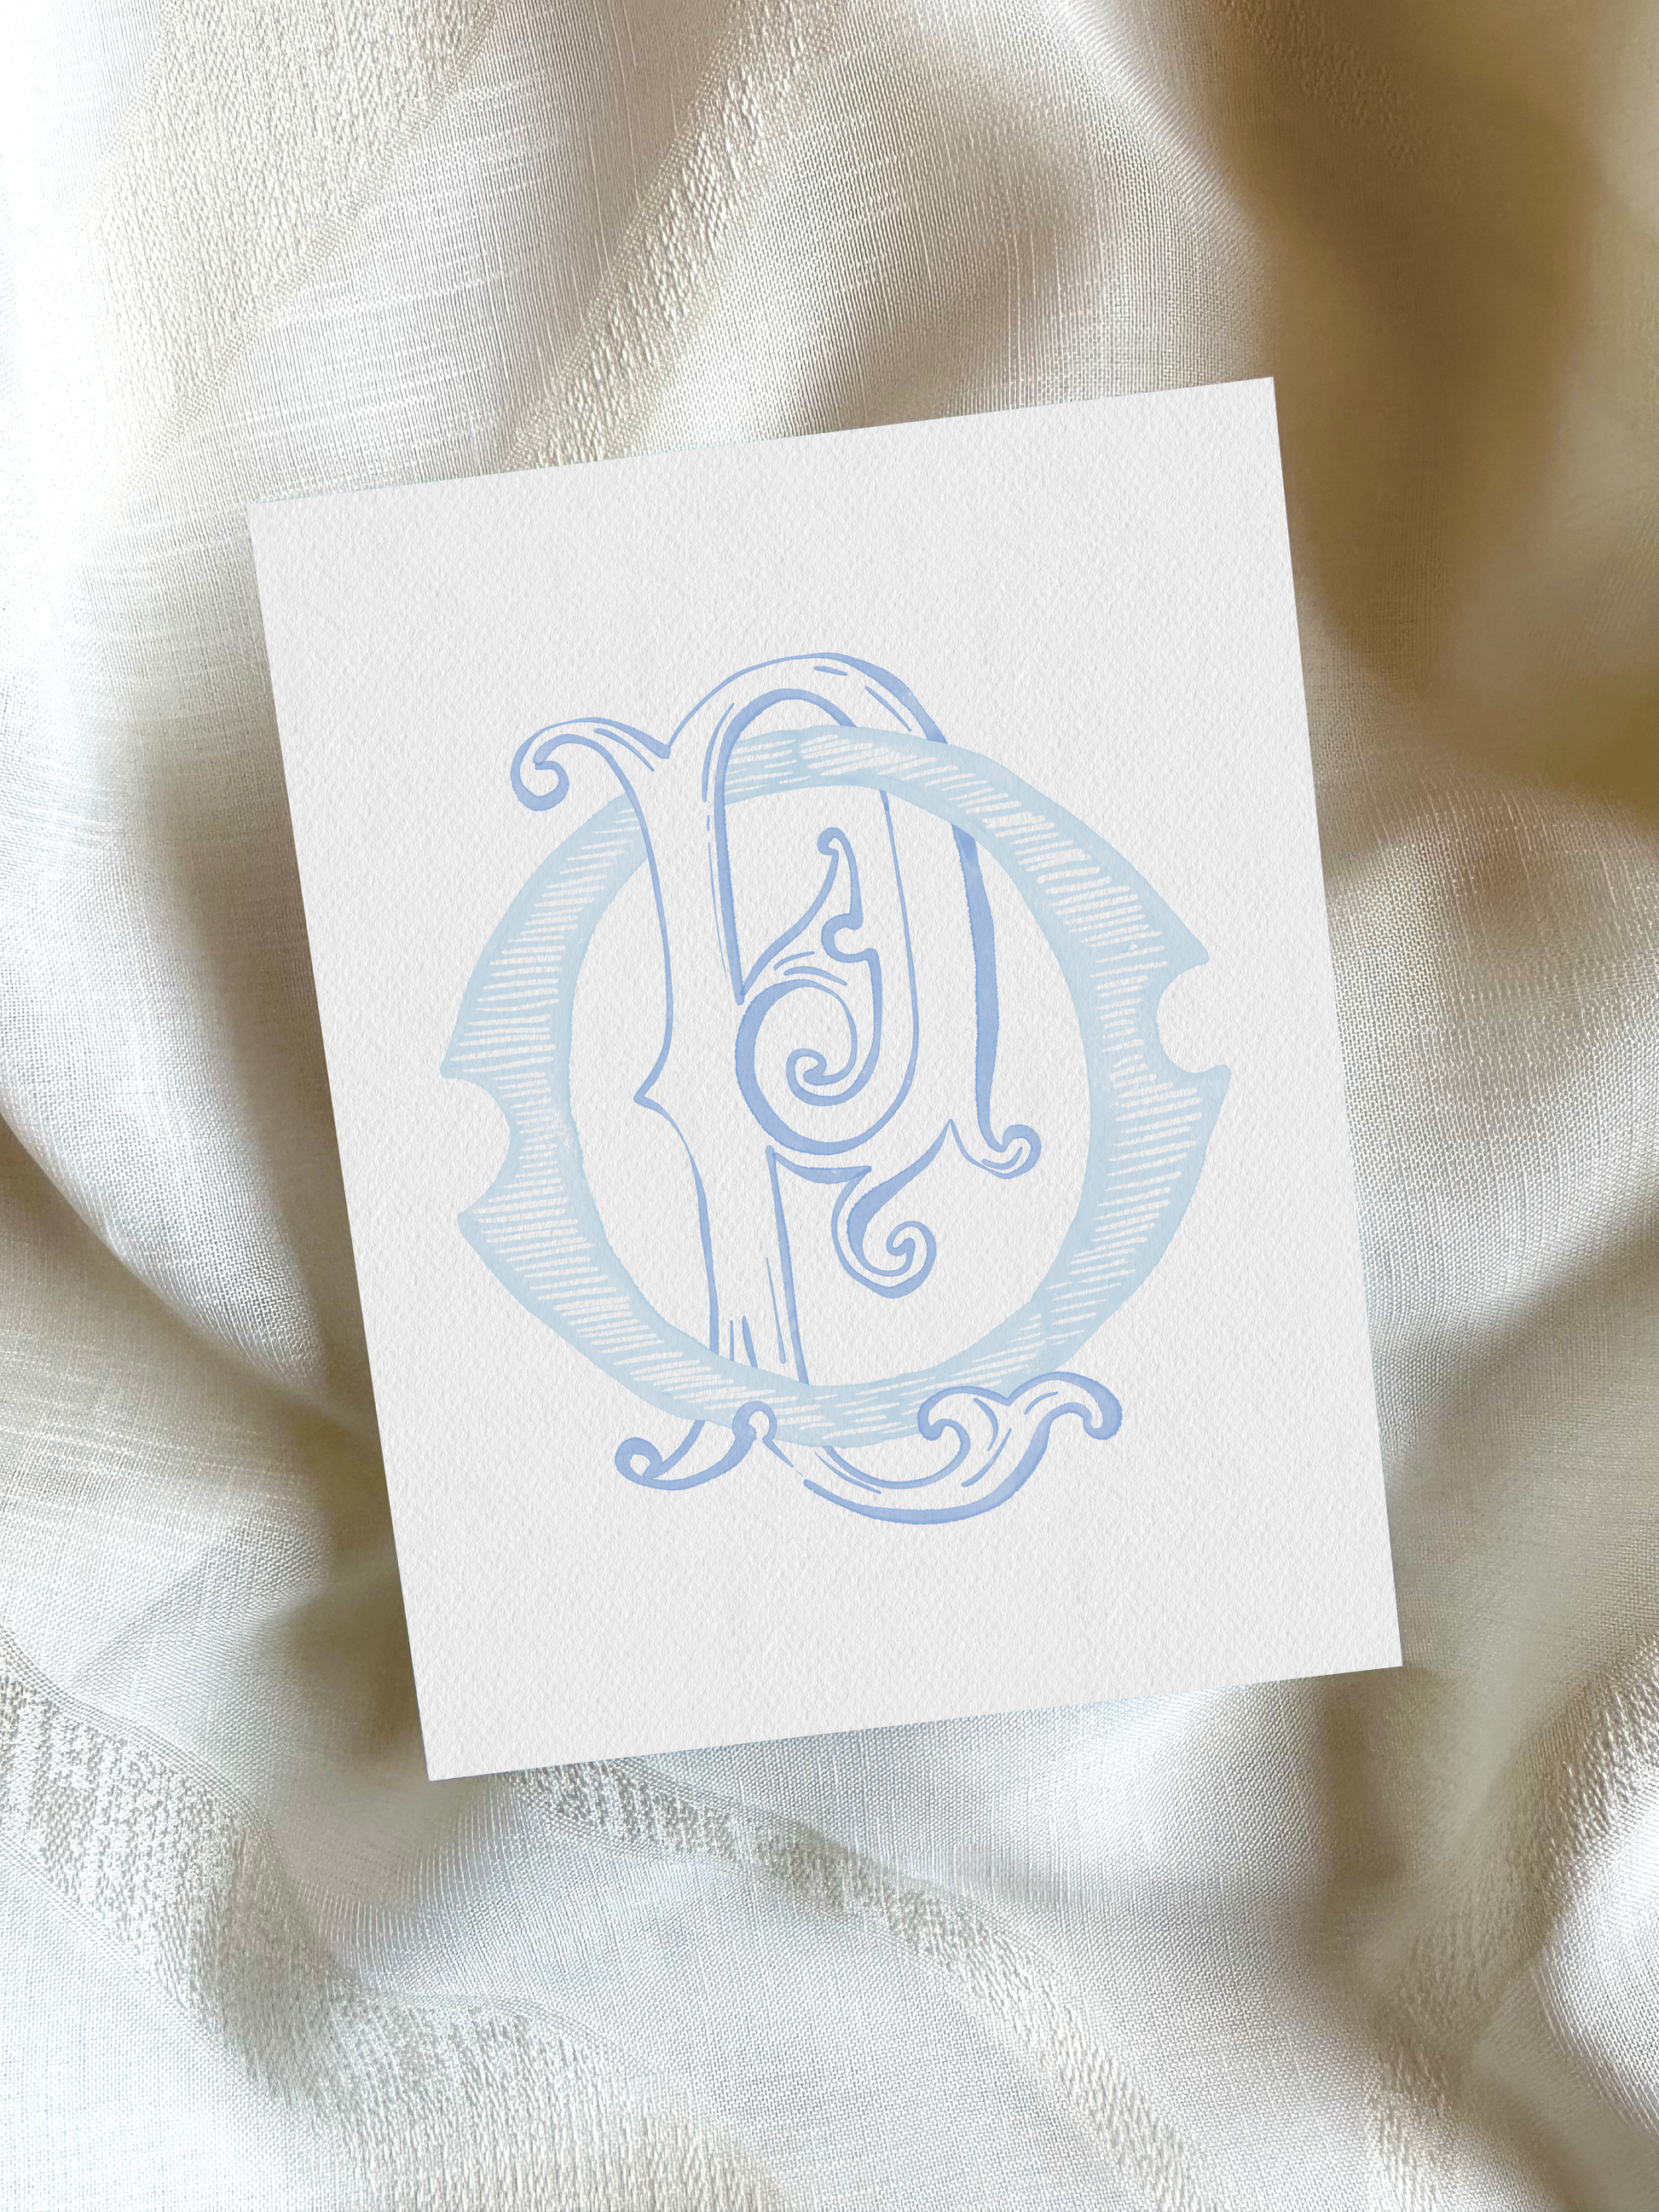 2 Letter Monogram with Letters OP PO | Digital Download - Wedding Monogram SVG, Personal Logo, Wedding Logo for Wedding Invitations The Wedding Crest Lab